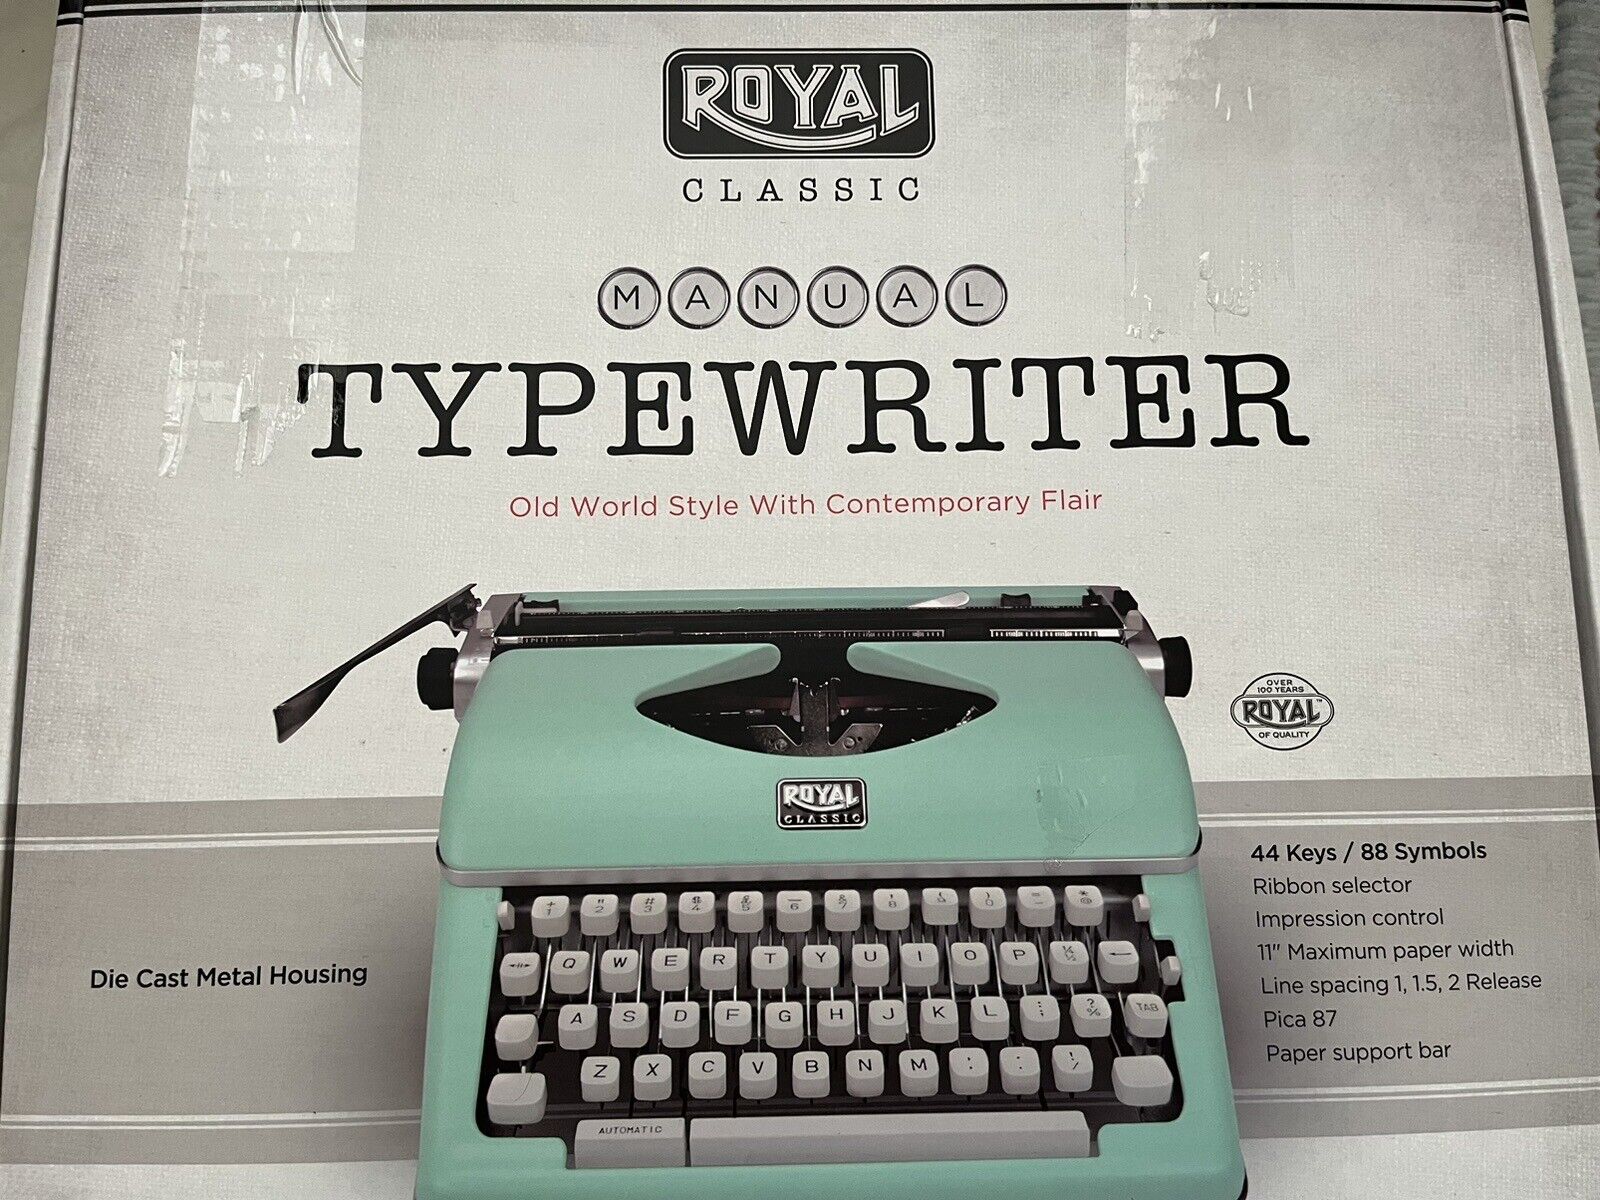 Royal Classic Manual Typewriter - Mint Green - 79101T (Read Description)